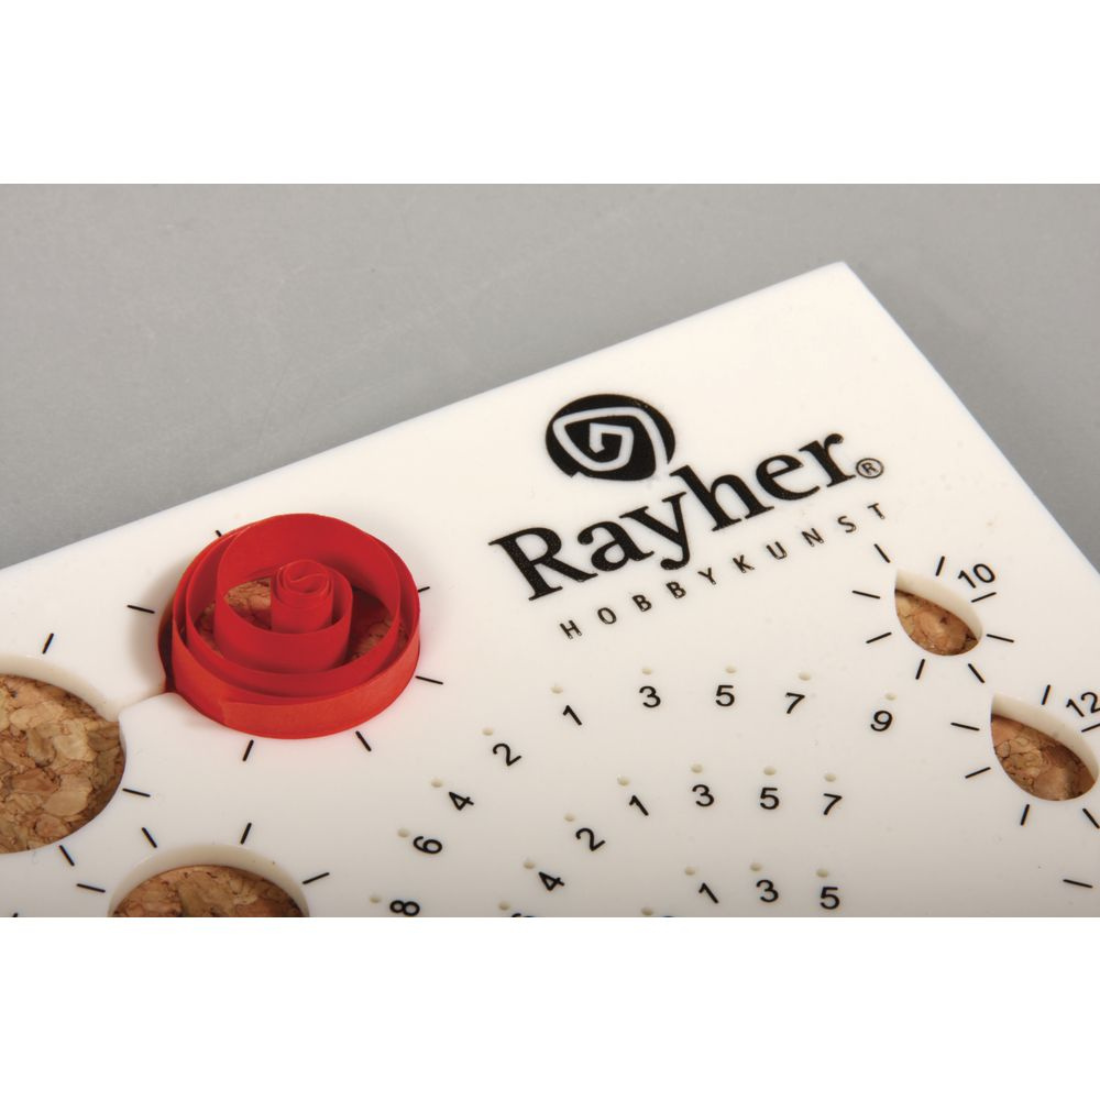 Conjunto stencil e placa de cortiça para quilling da Rayher.